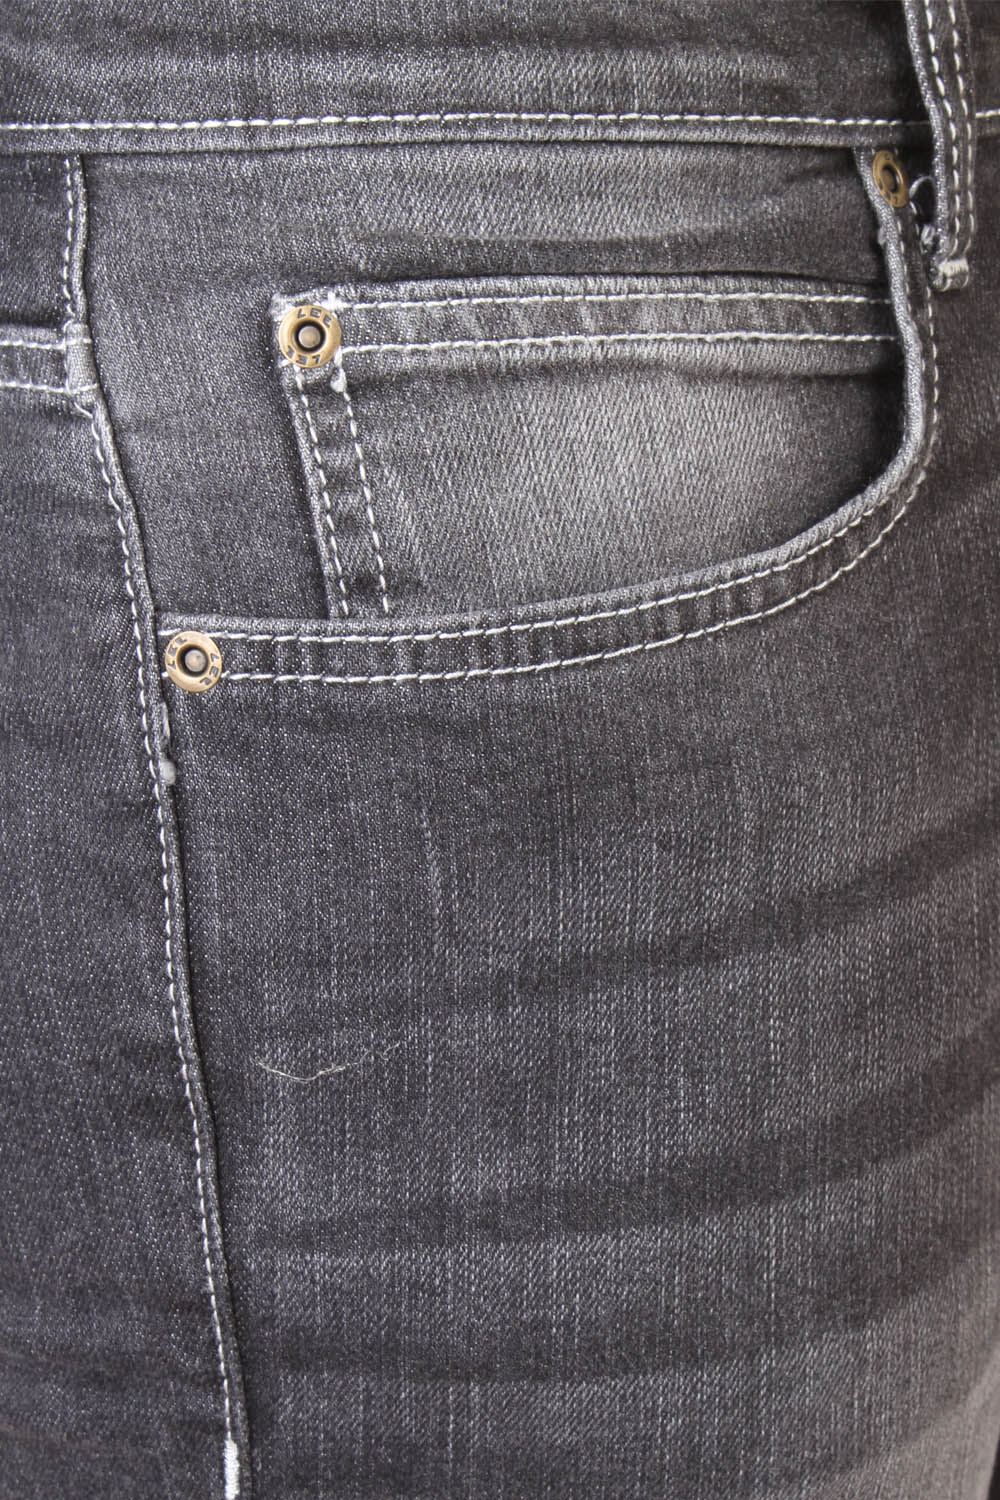 Buy Lee Black Mid Rise Regular Fit Jeans For Men Online @ ₹1559 from ...